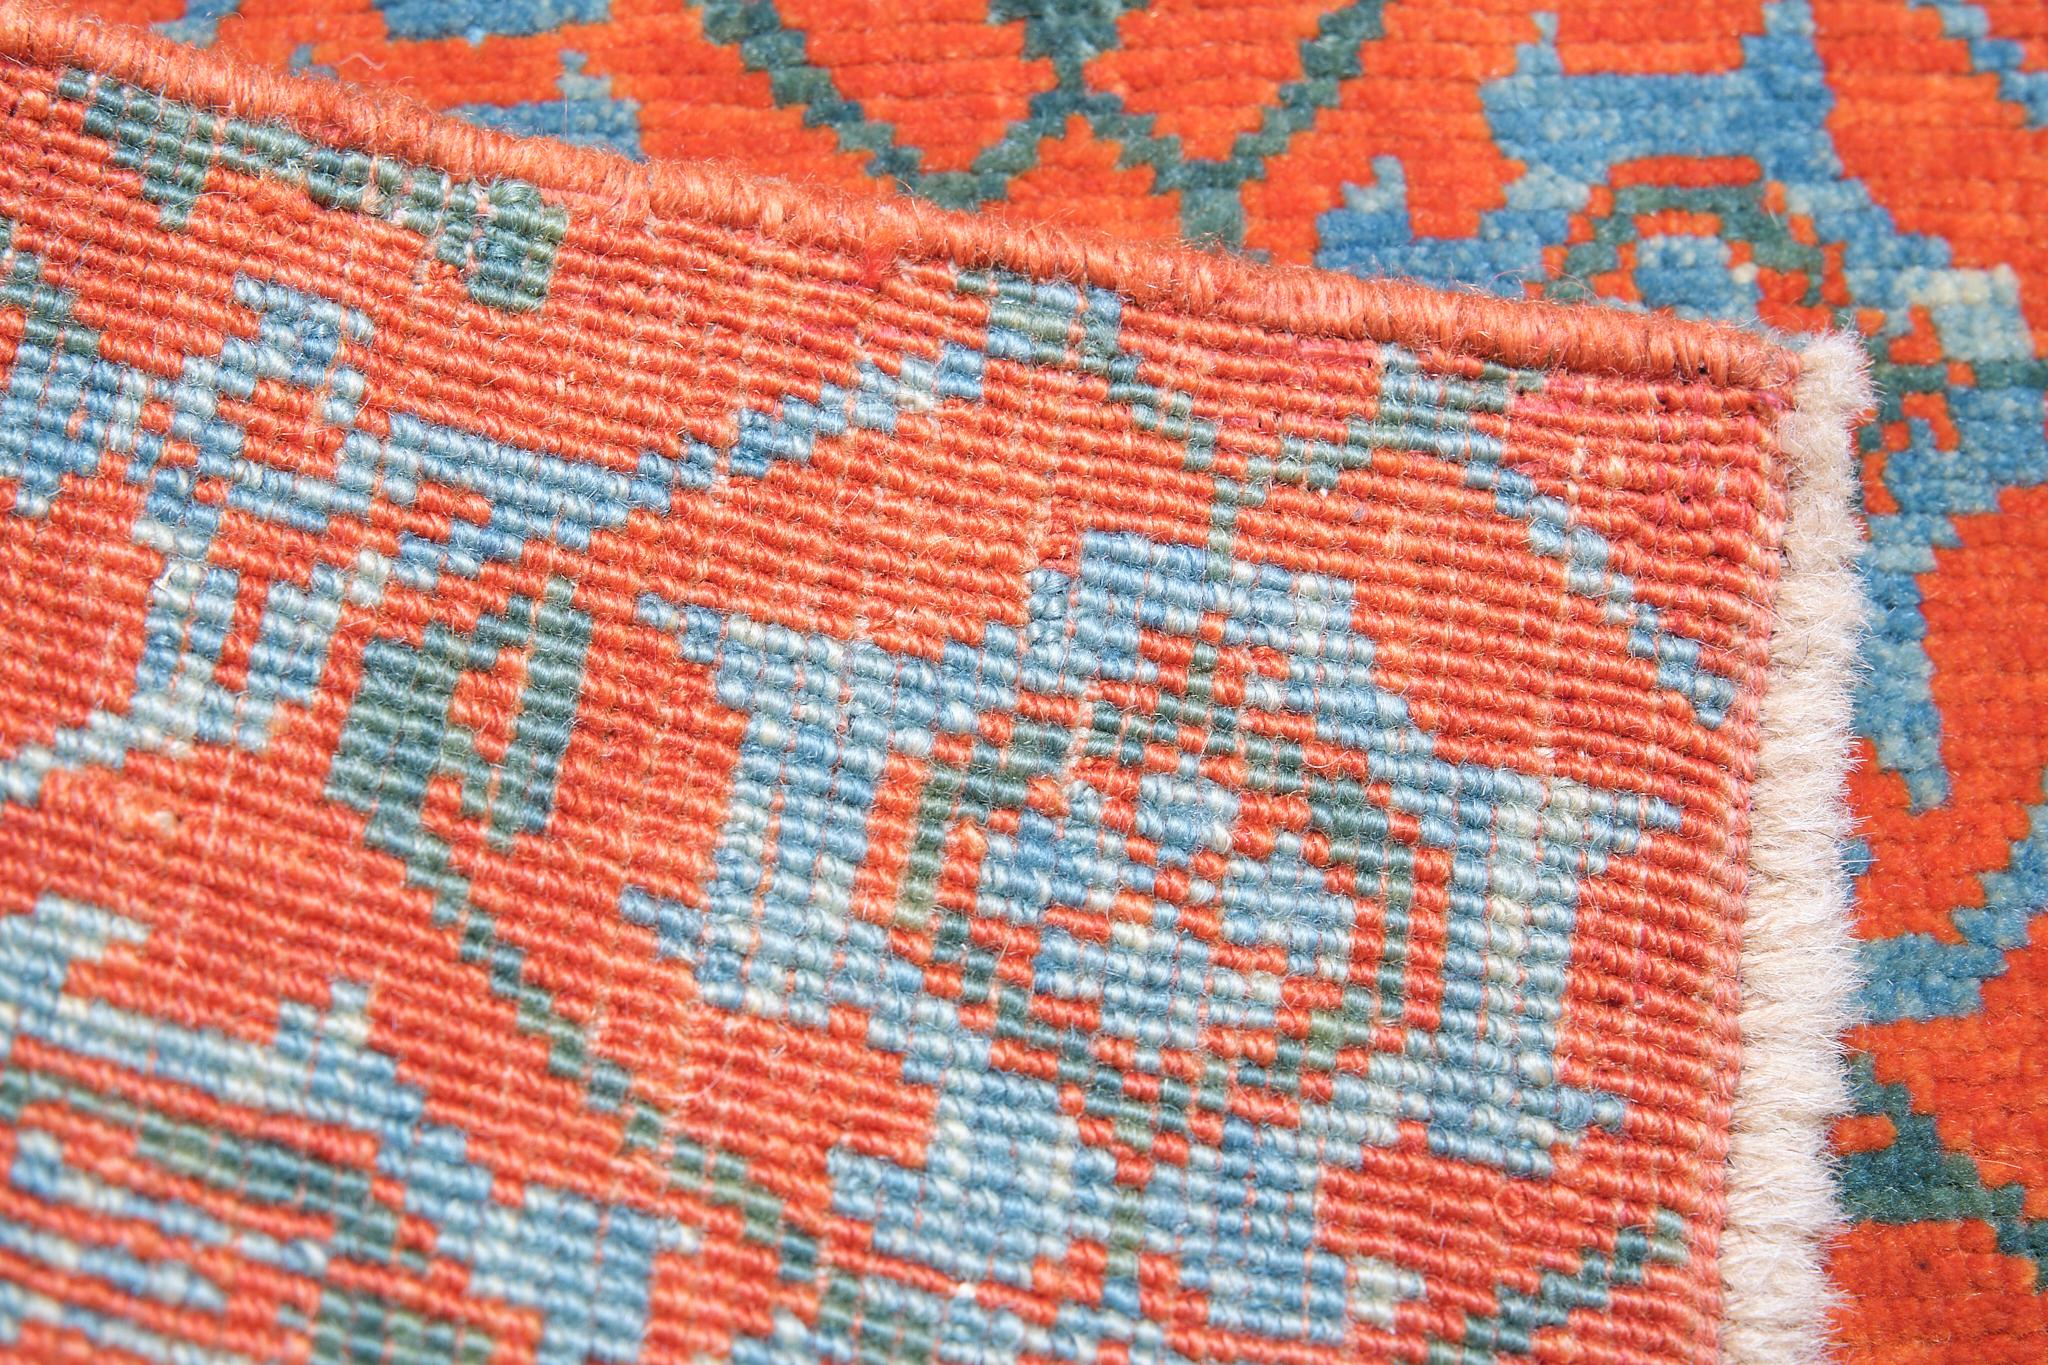 Hand-Woven Ararat Rugs Mamluk Wagireh Rug Lattice Pattern Revival Carpet Natural Dyed For Sale